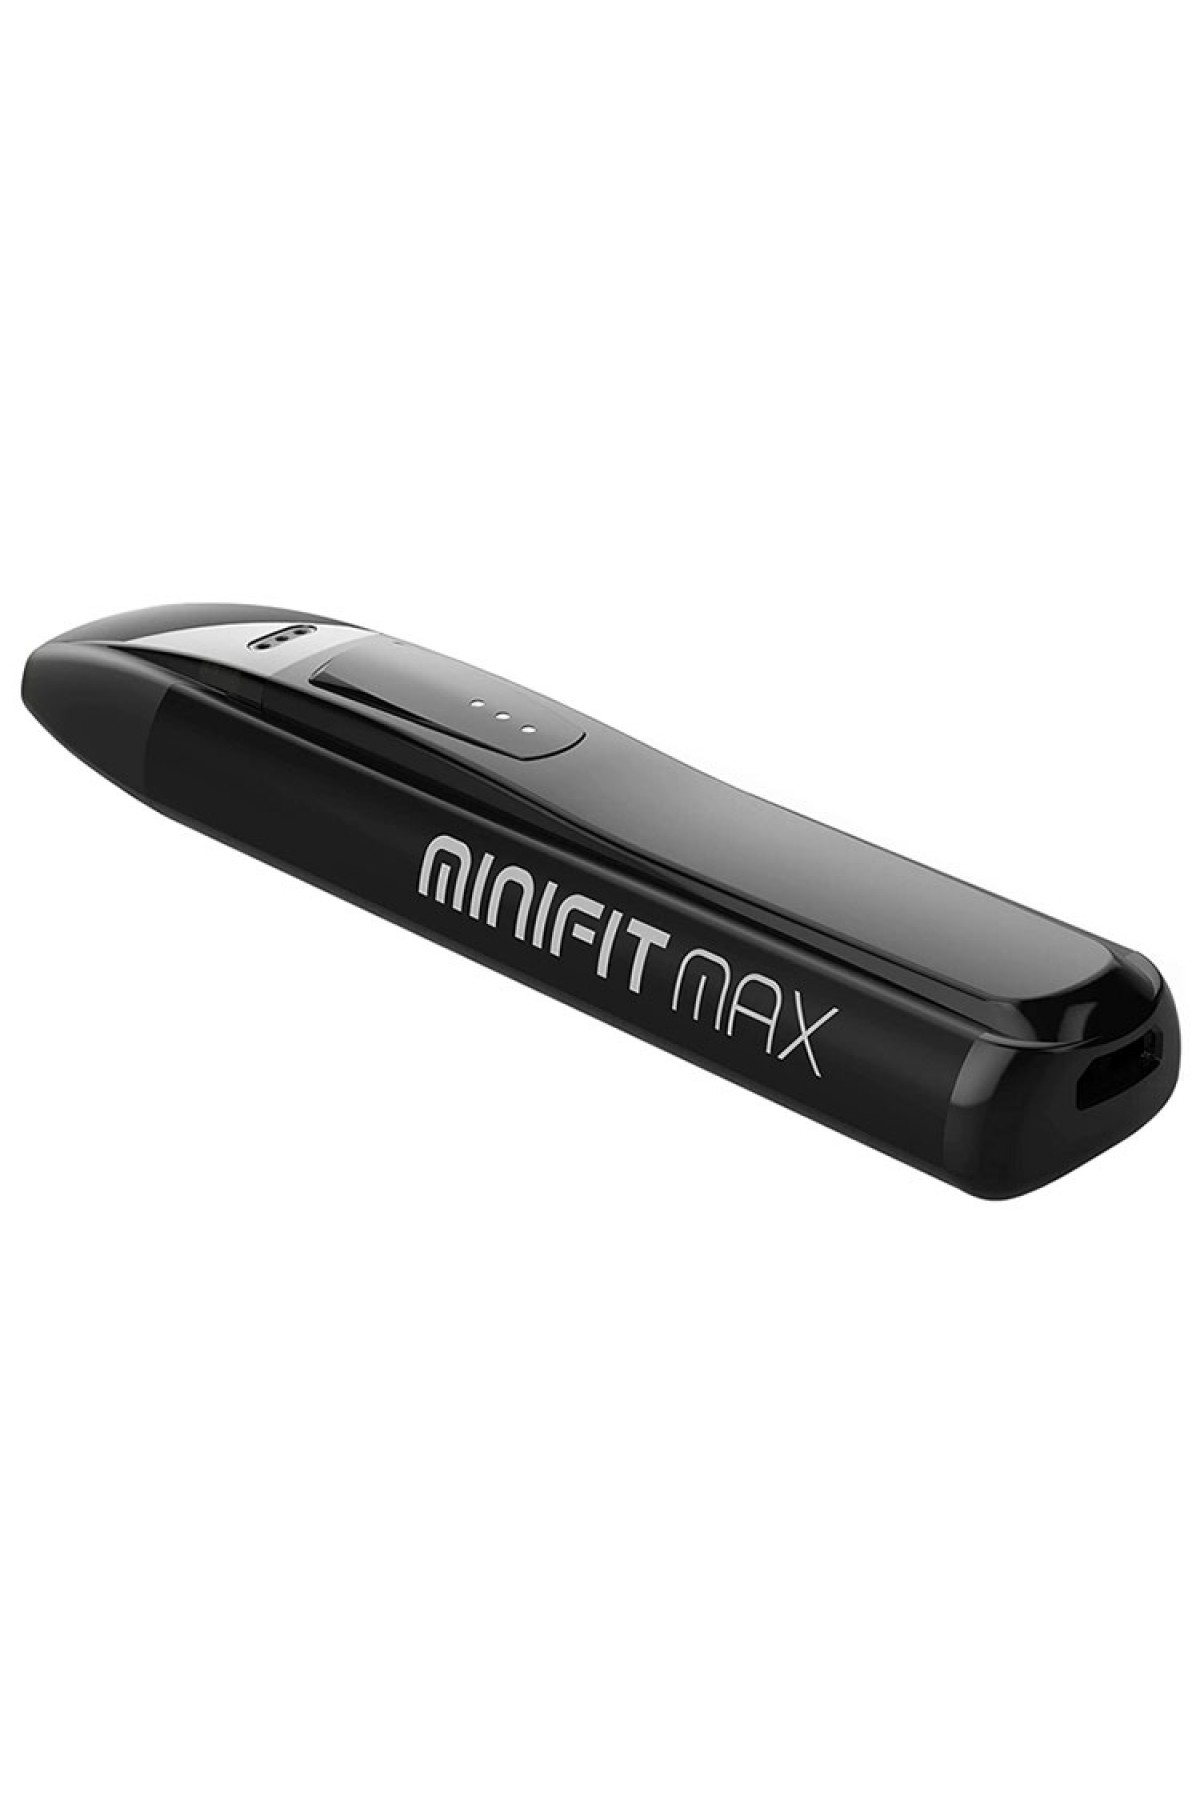 Justfog Minifit Max Pod Kit 650mAh